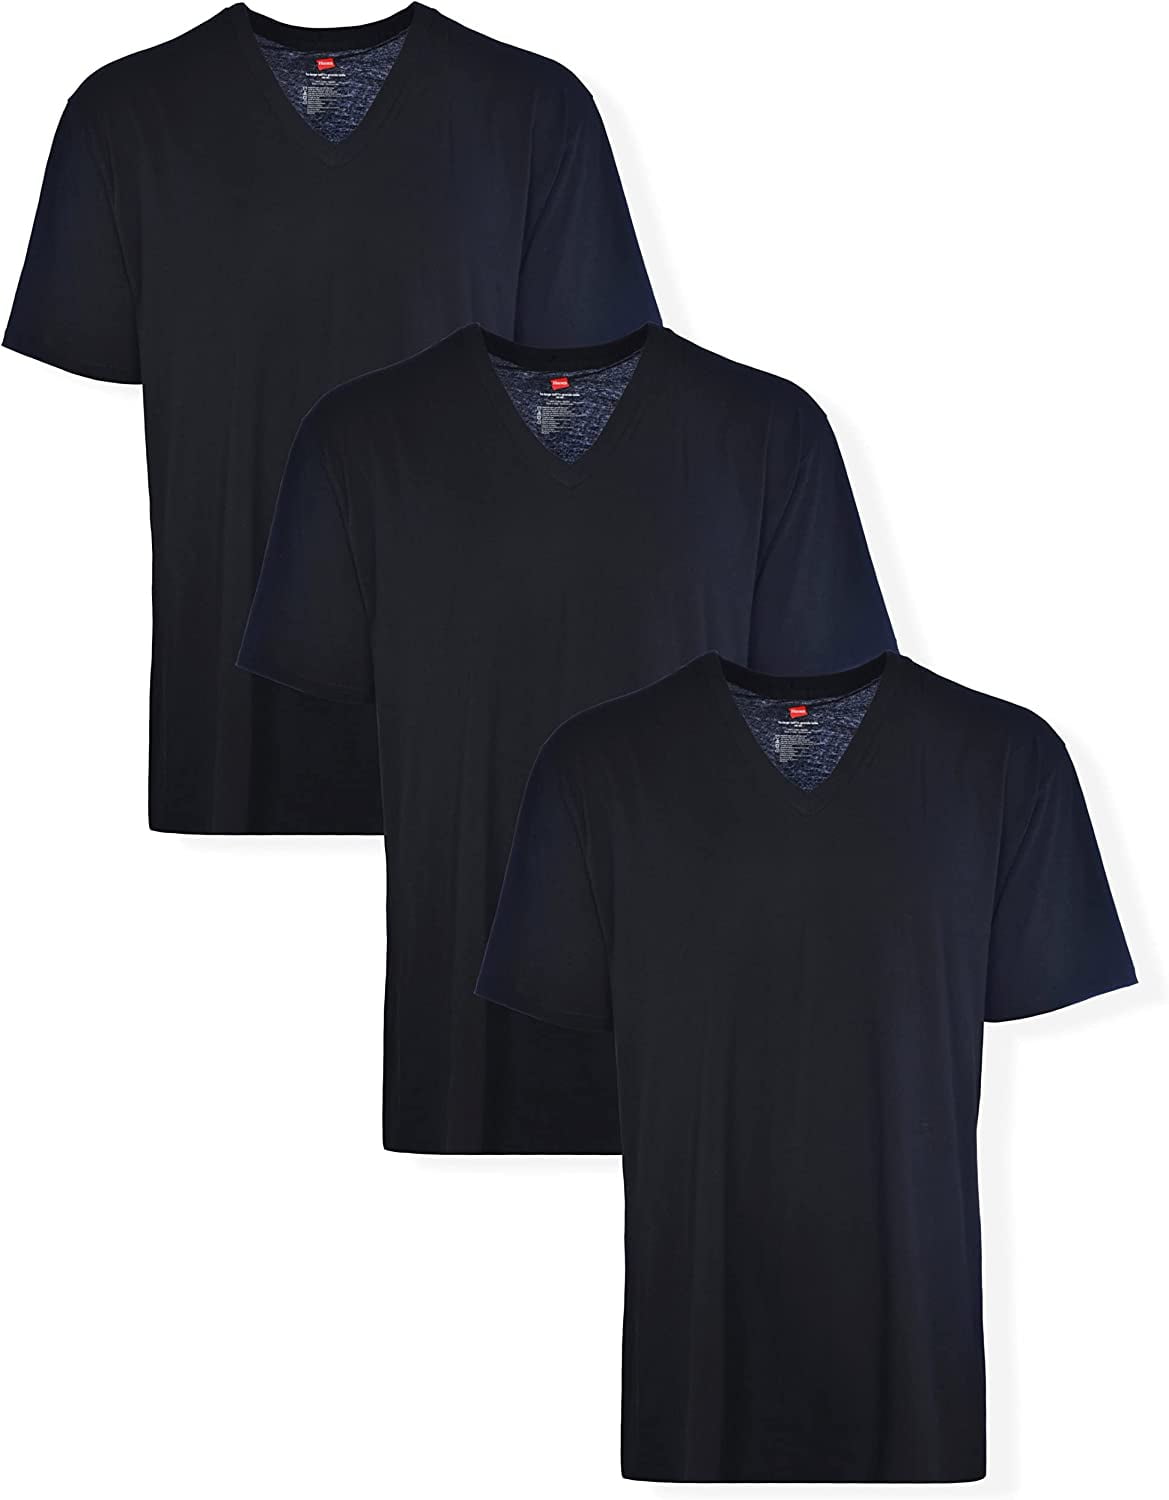 Hanes Men's Tall Man Cotton V-Neck Under T-Shirt 3 Pack, Black,XX-Large ...